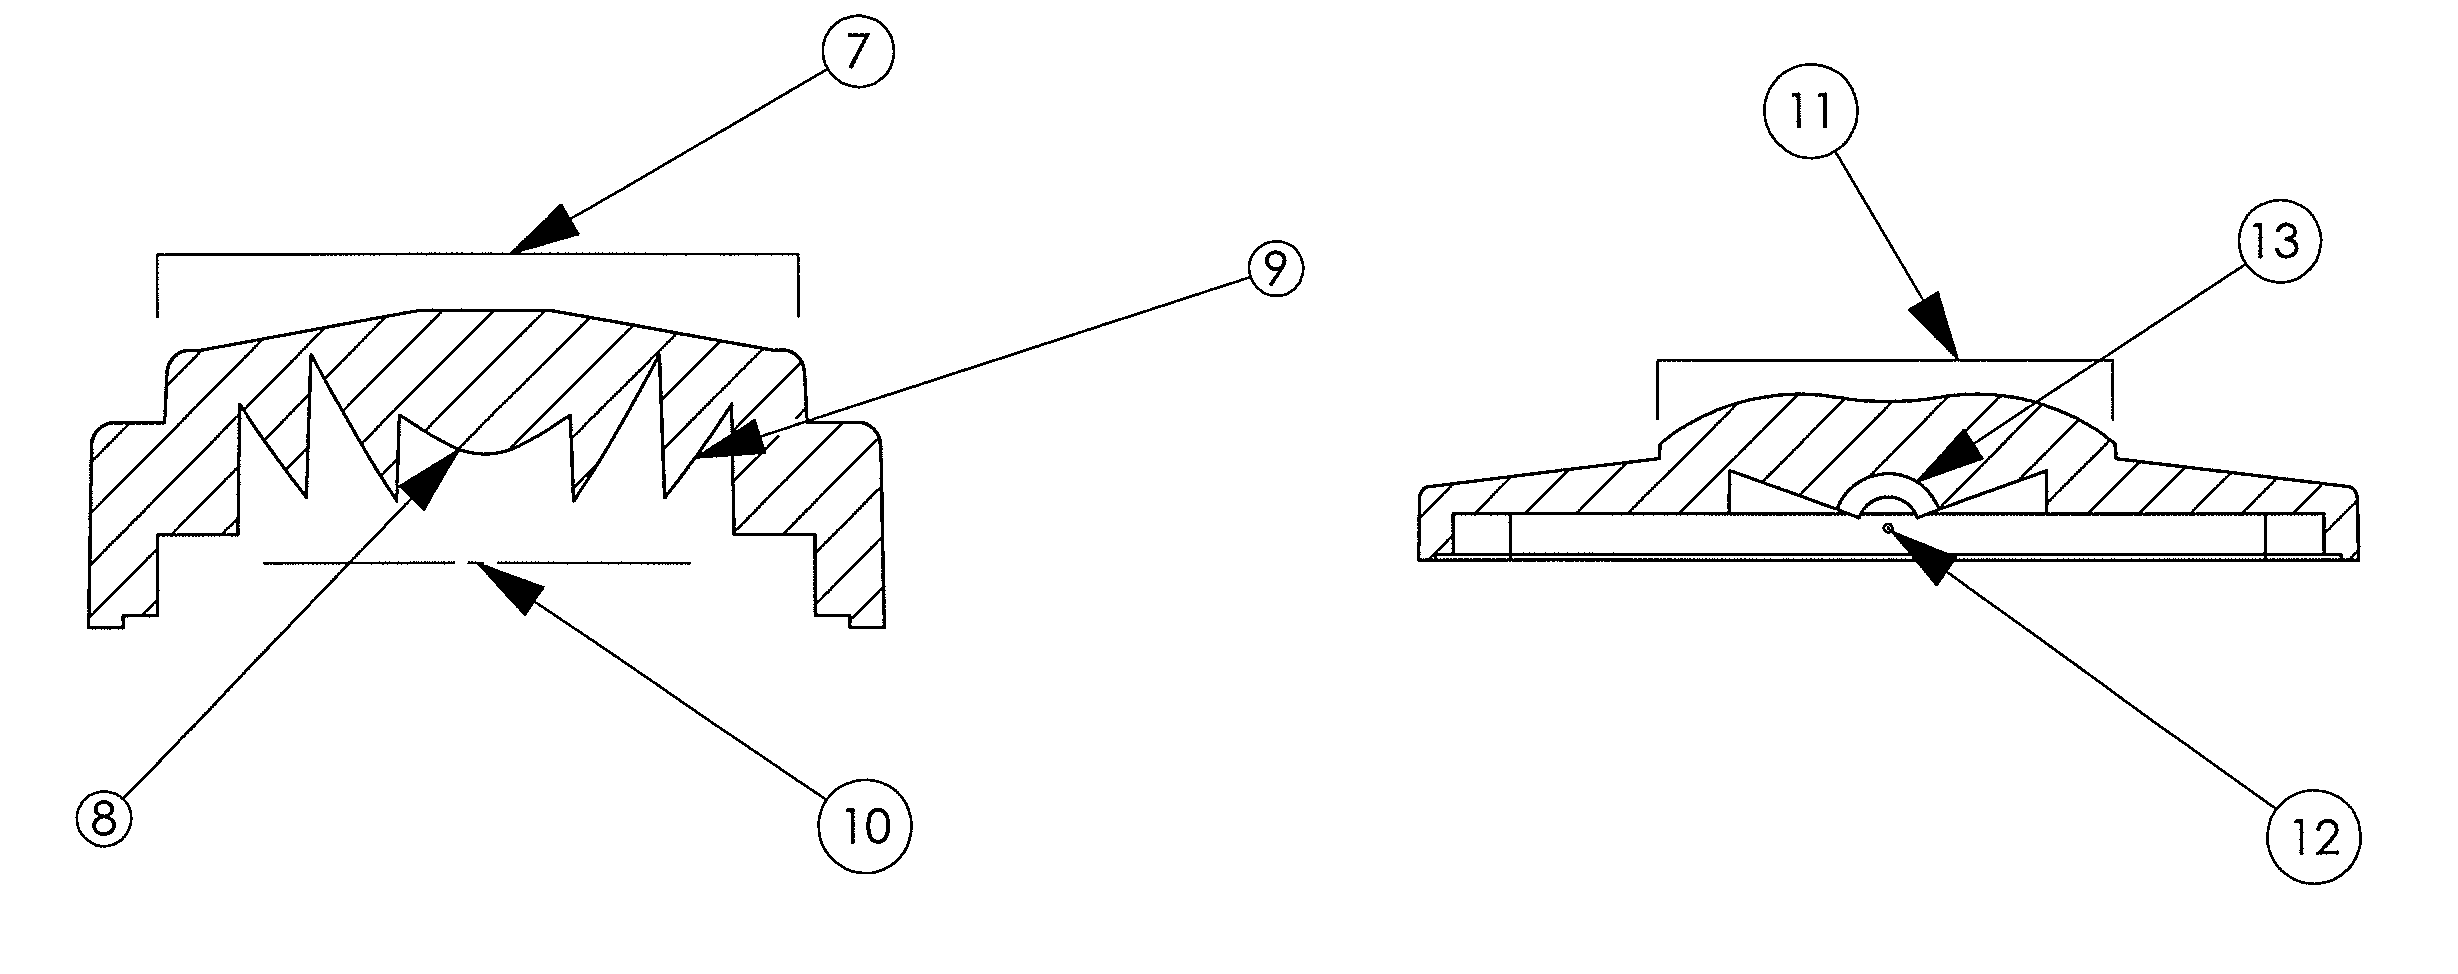 Complex optical lens apparatus for creating rectangular light output distribution